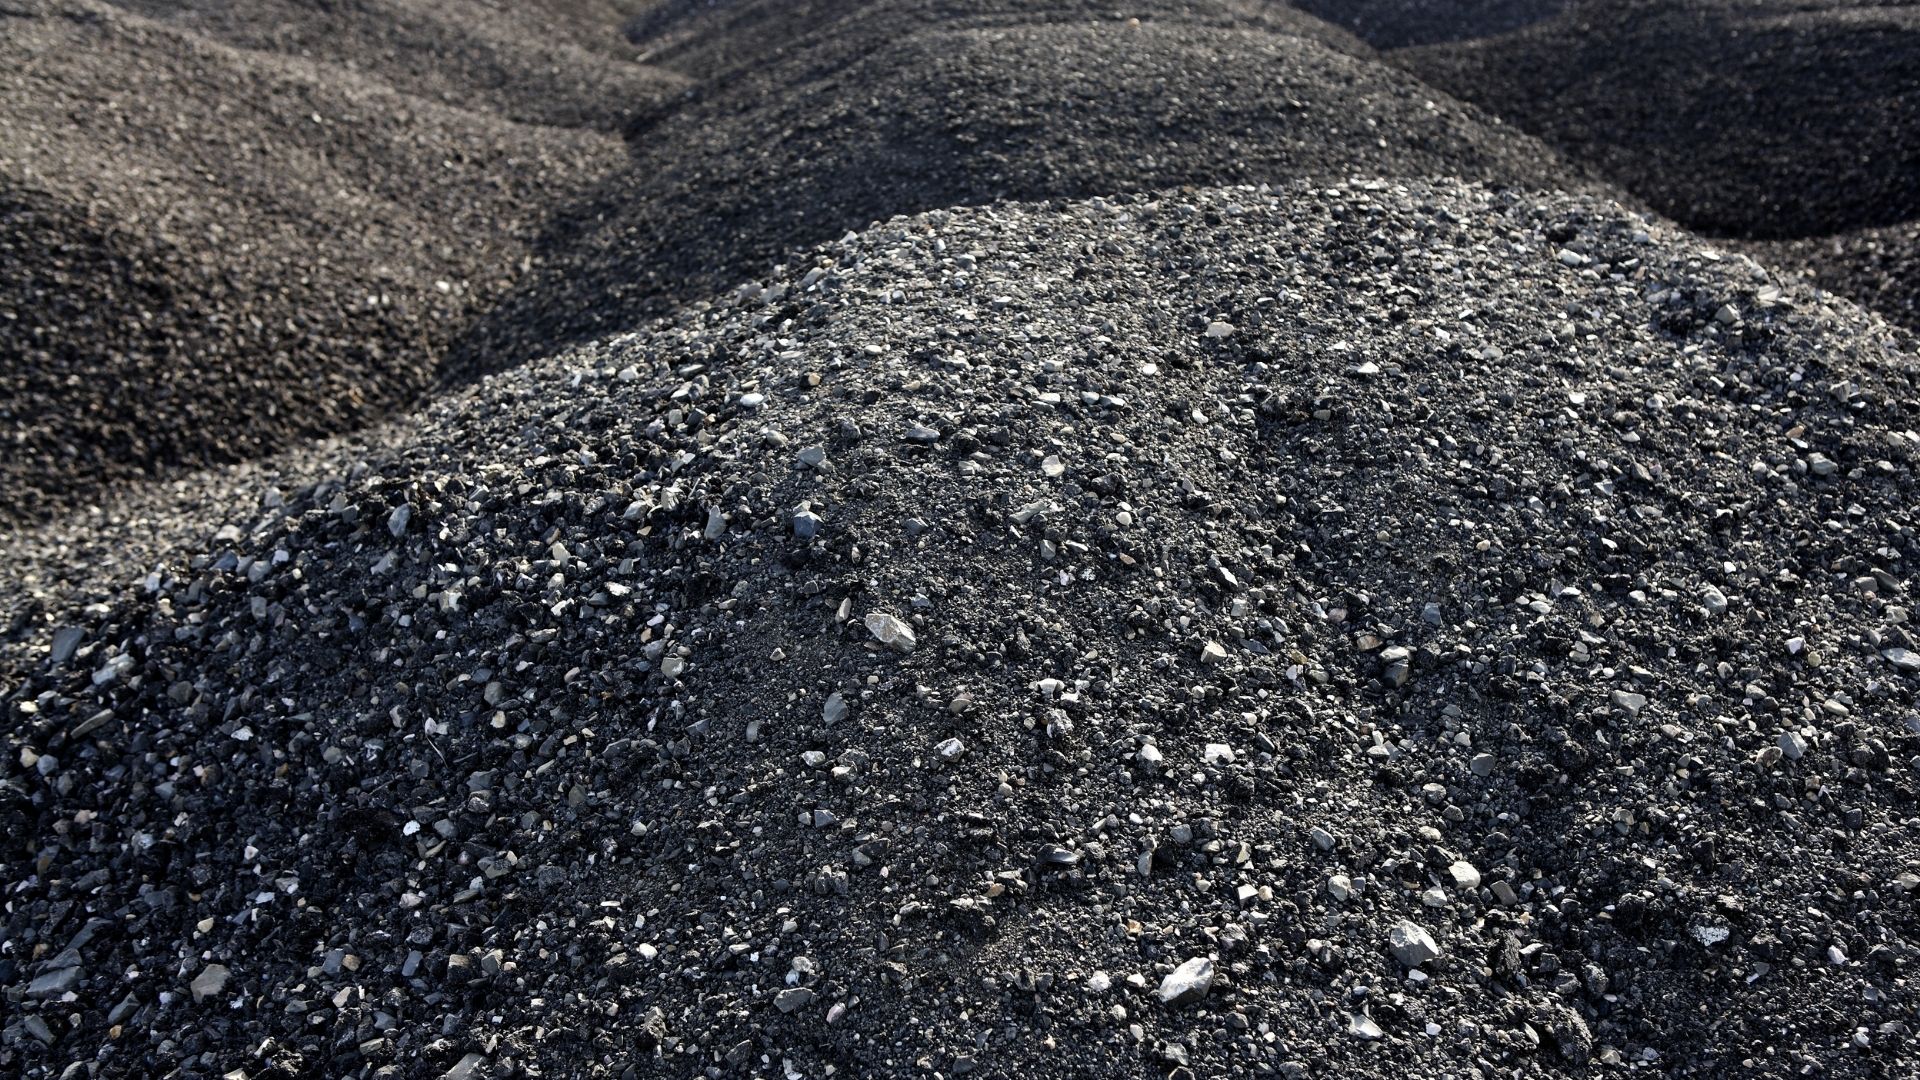 Piles of asphalt